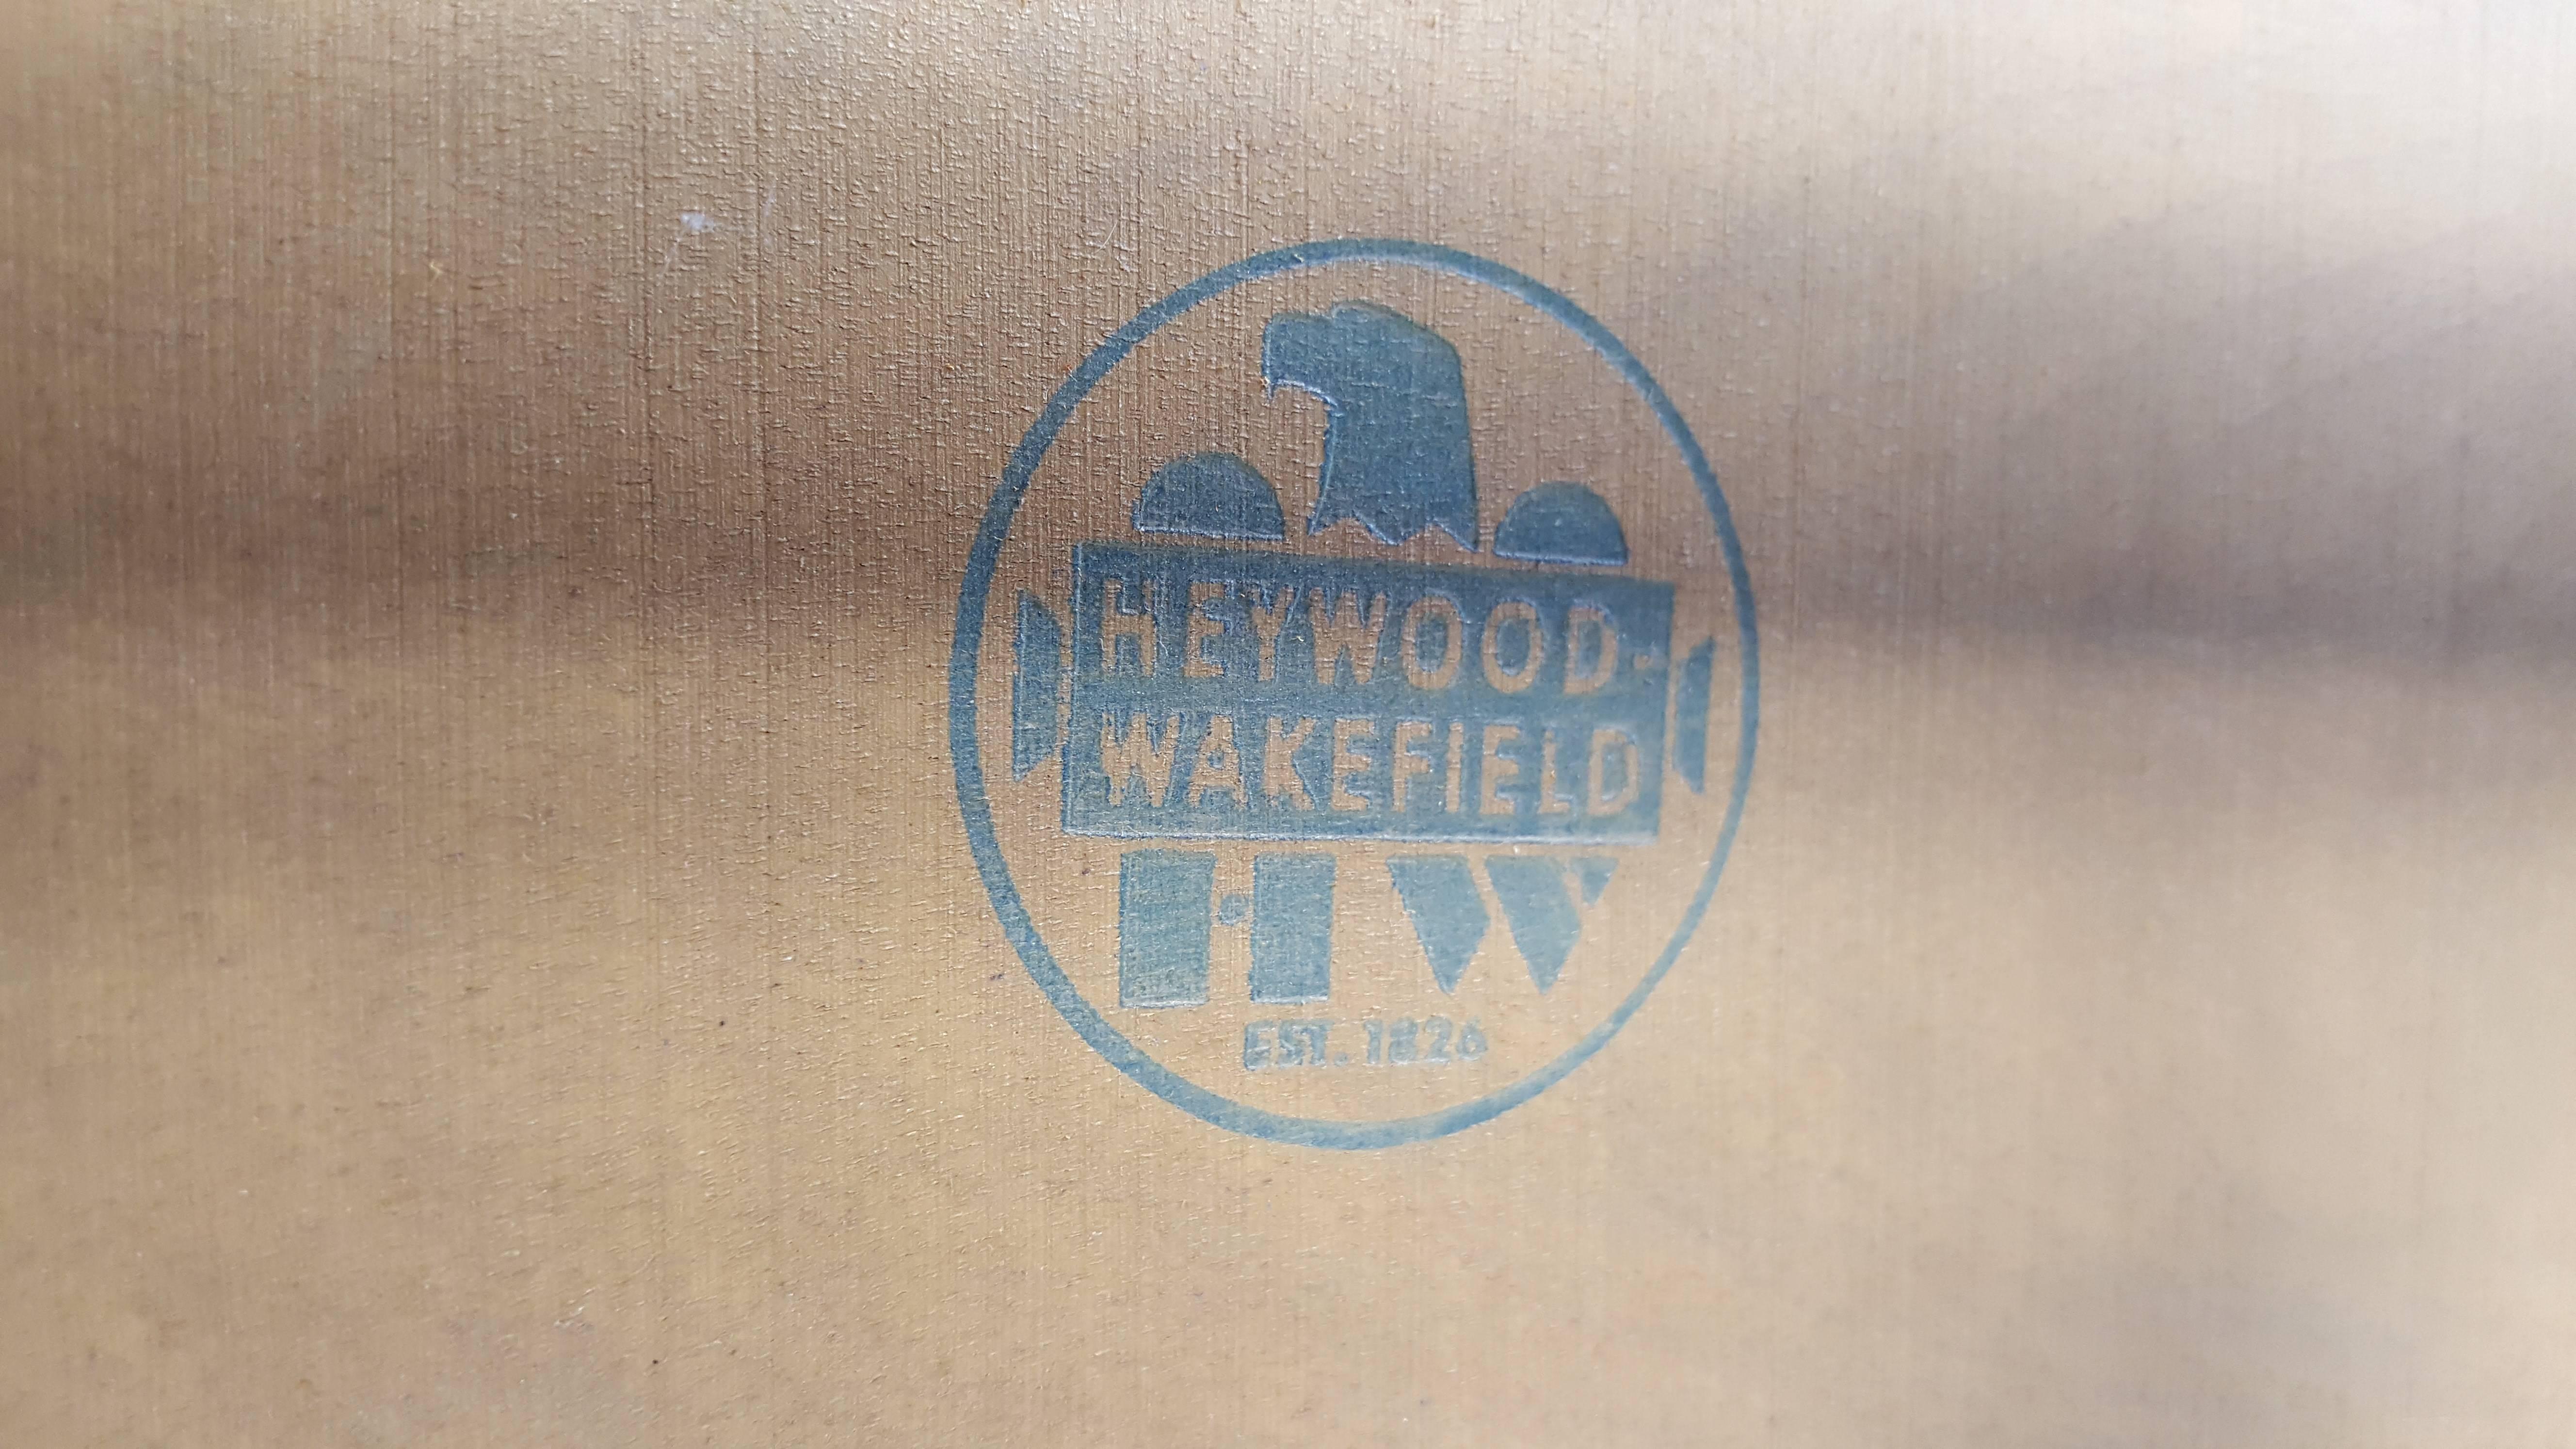 Pair of Streamline Modern Lounge Chairs Heywood-Wakefield 1